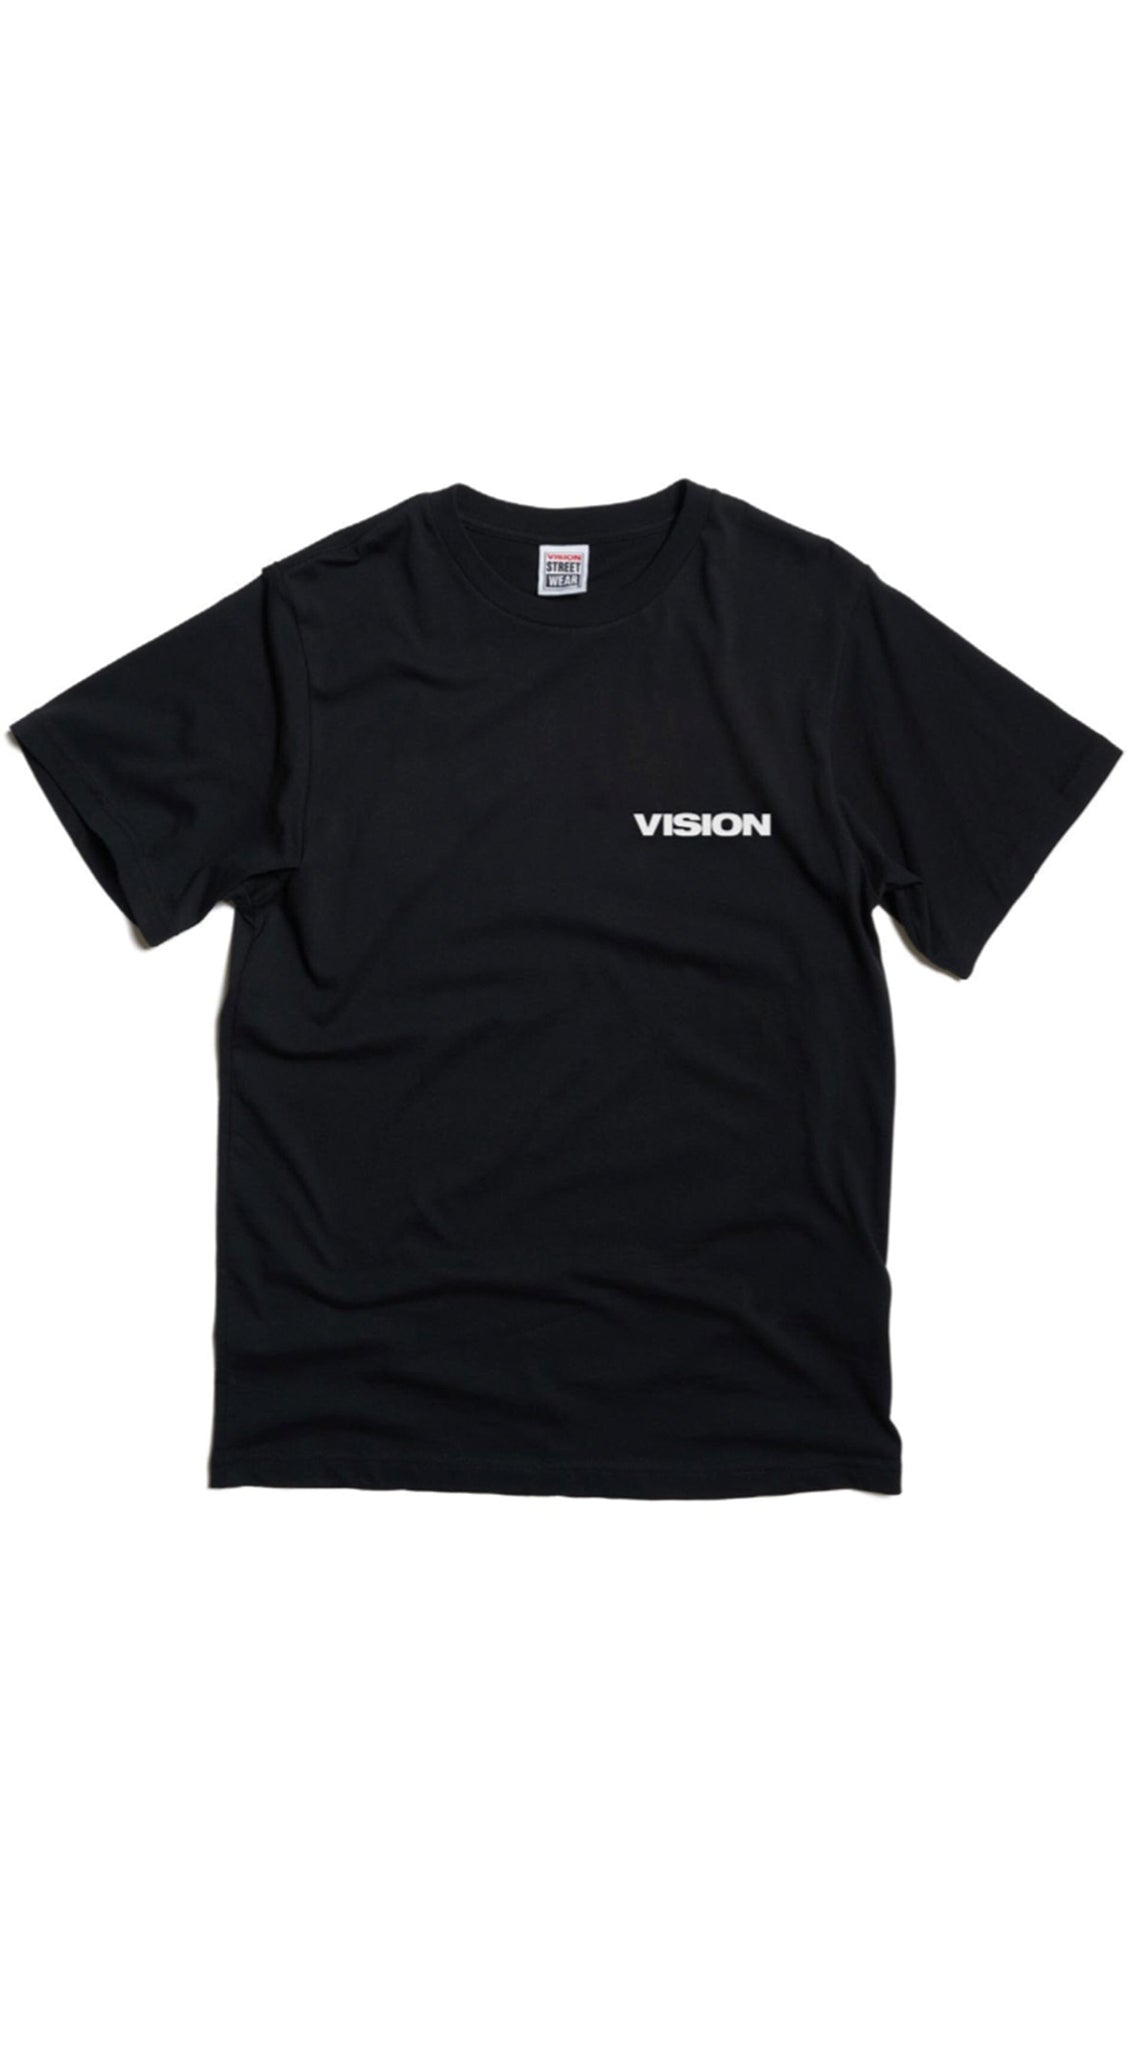 Vision Street Wear Twist Box Logo Black Washed S/S T-shirt - Camiseta Ropa Vision Skateboards 